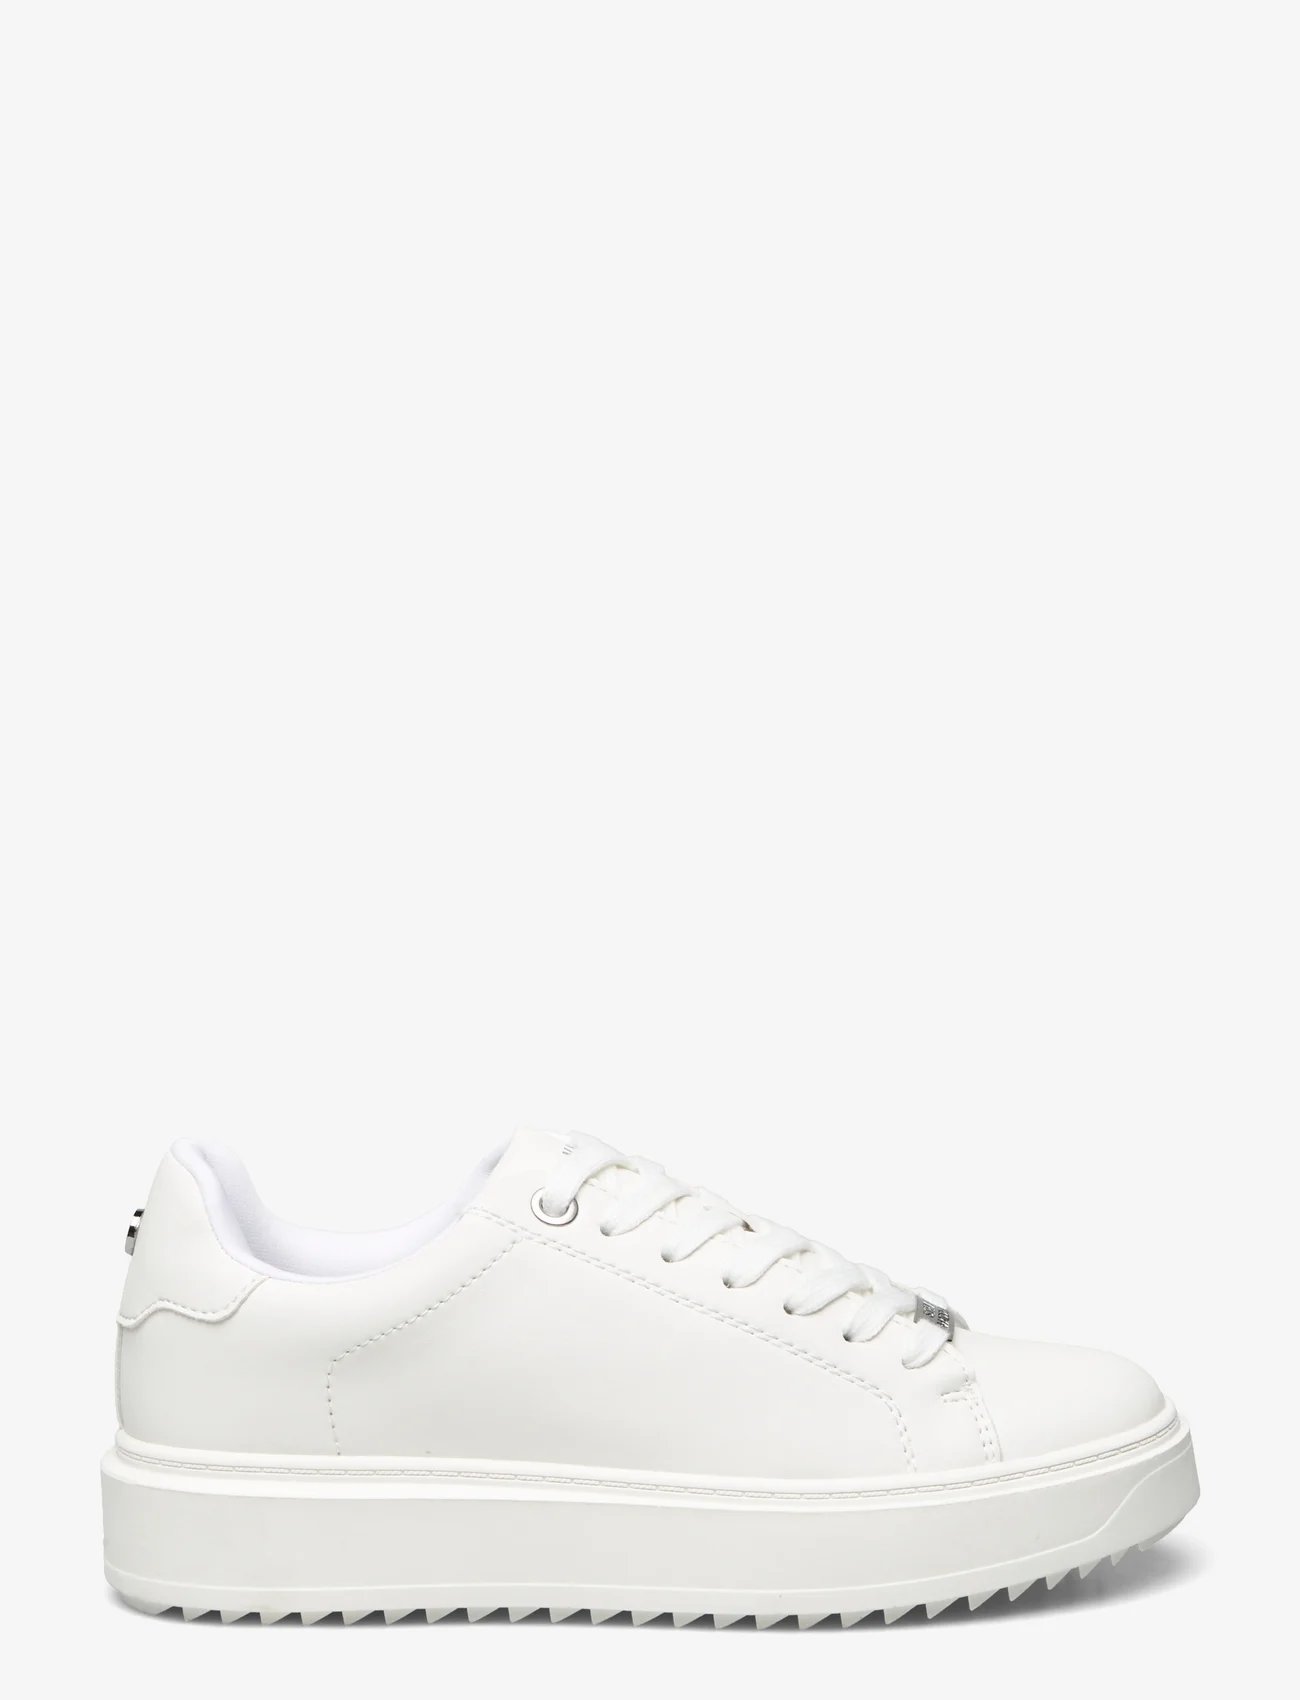 Steve Madden - Catcher Sneaker - low top sneakers - white - 1